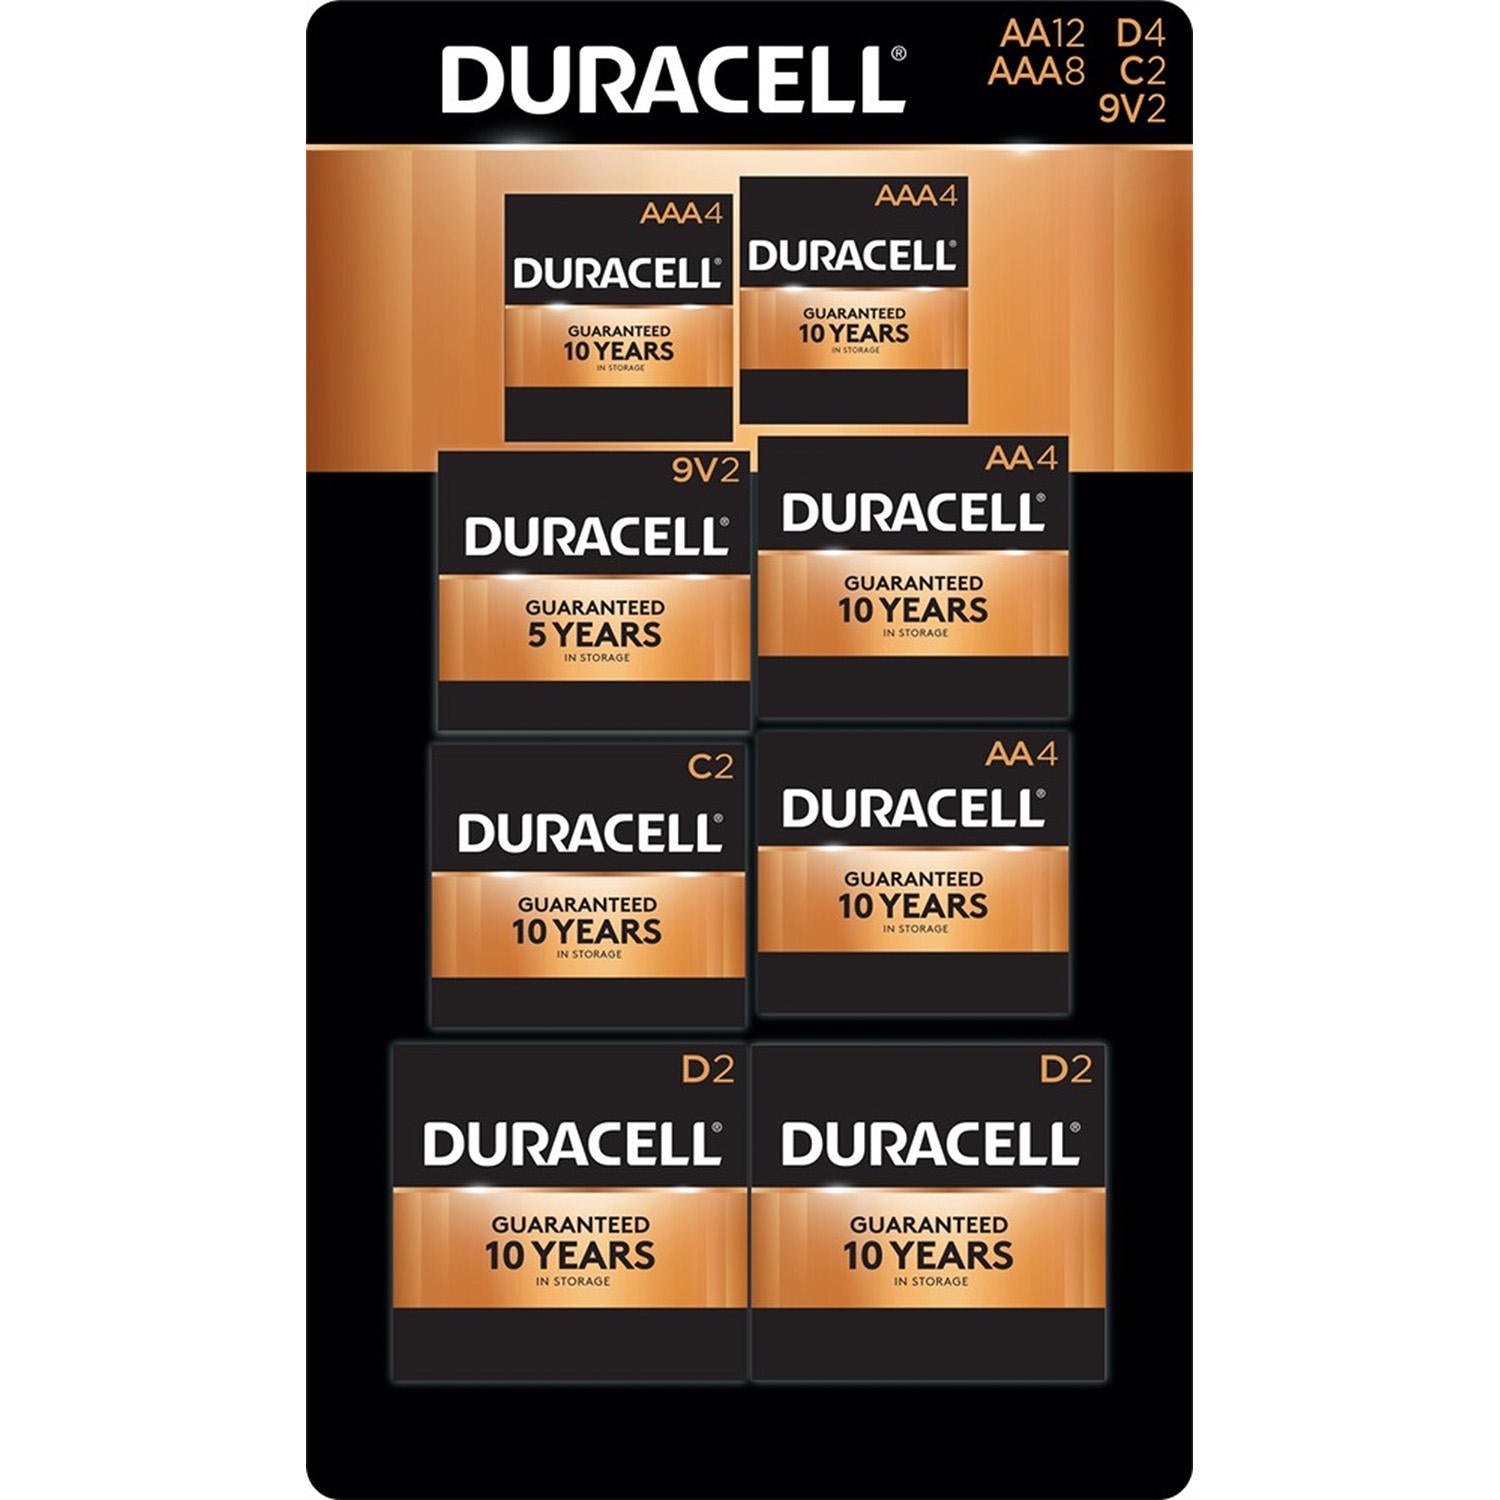 8 Count Duracell AA Coppertop Alkaline Batteries (2 Packs of 4)